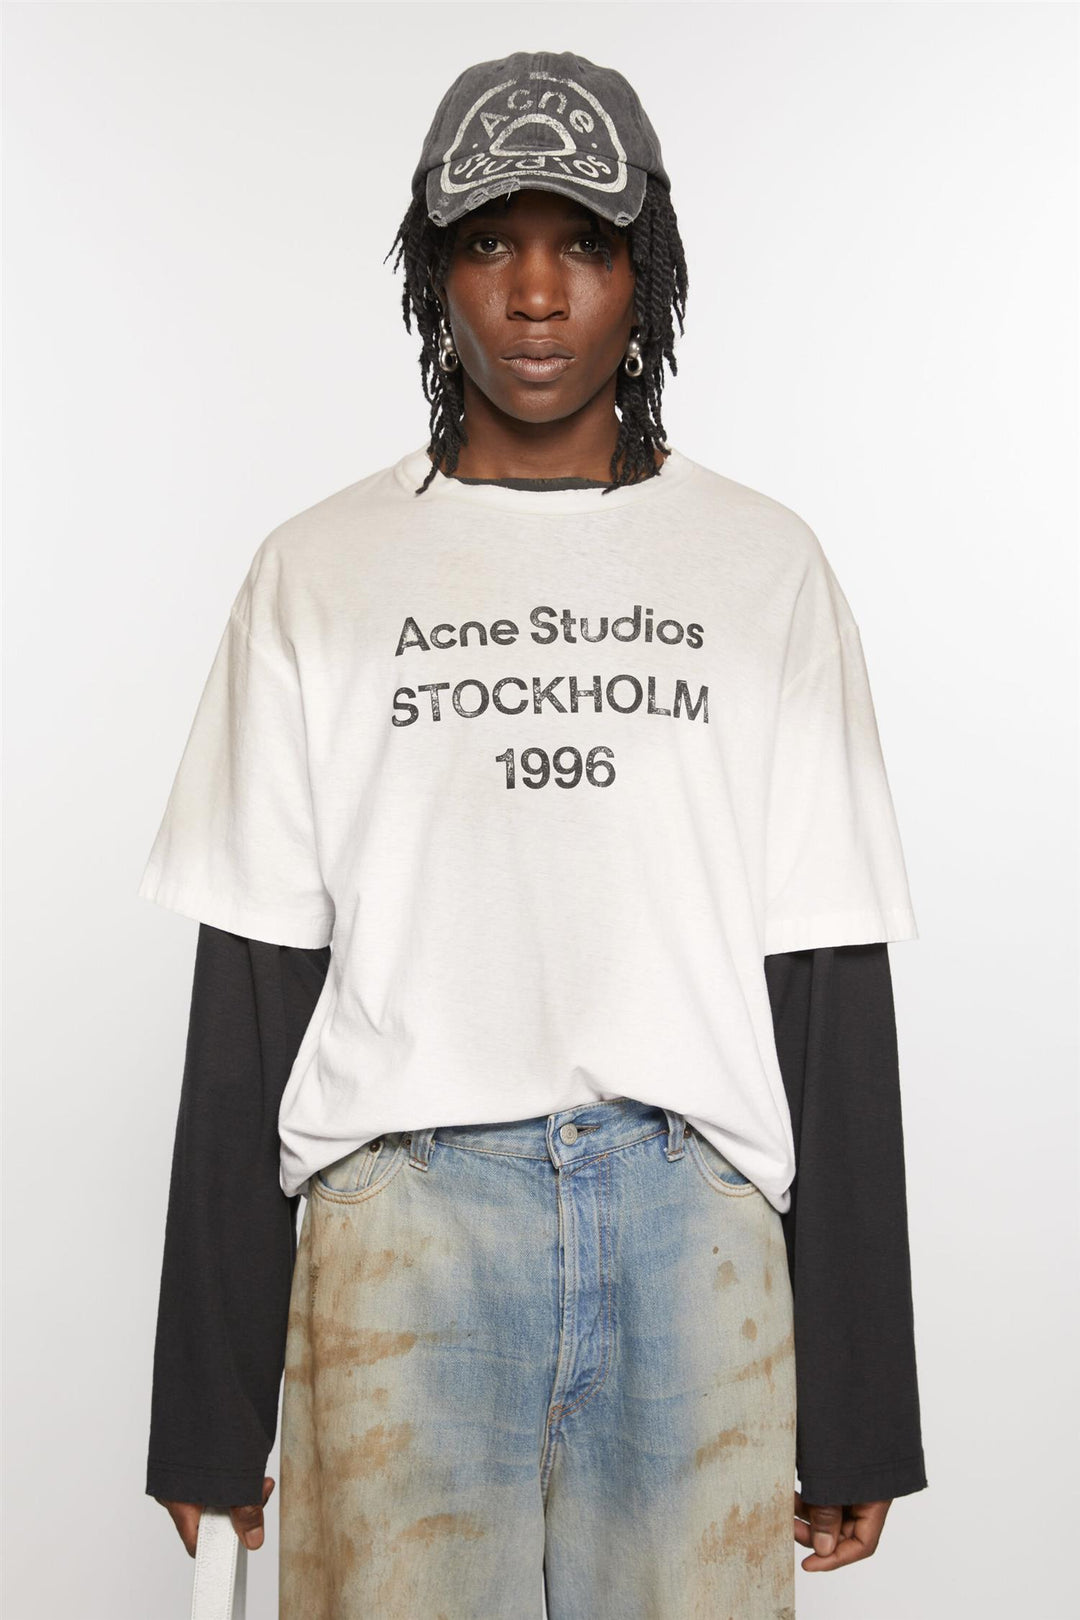 ACNE STUDIOS - Logo T-Shirt Stockholm 1996 Short Sleeve - Dale